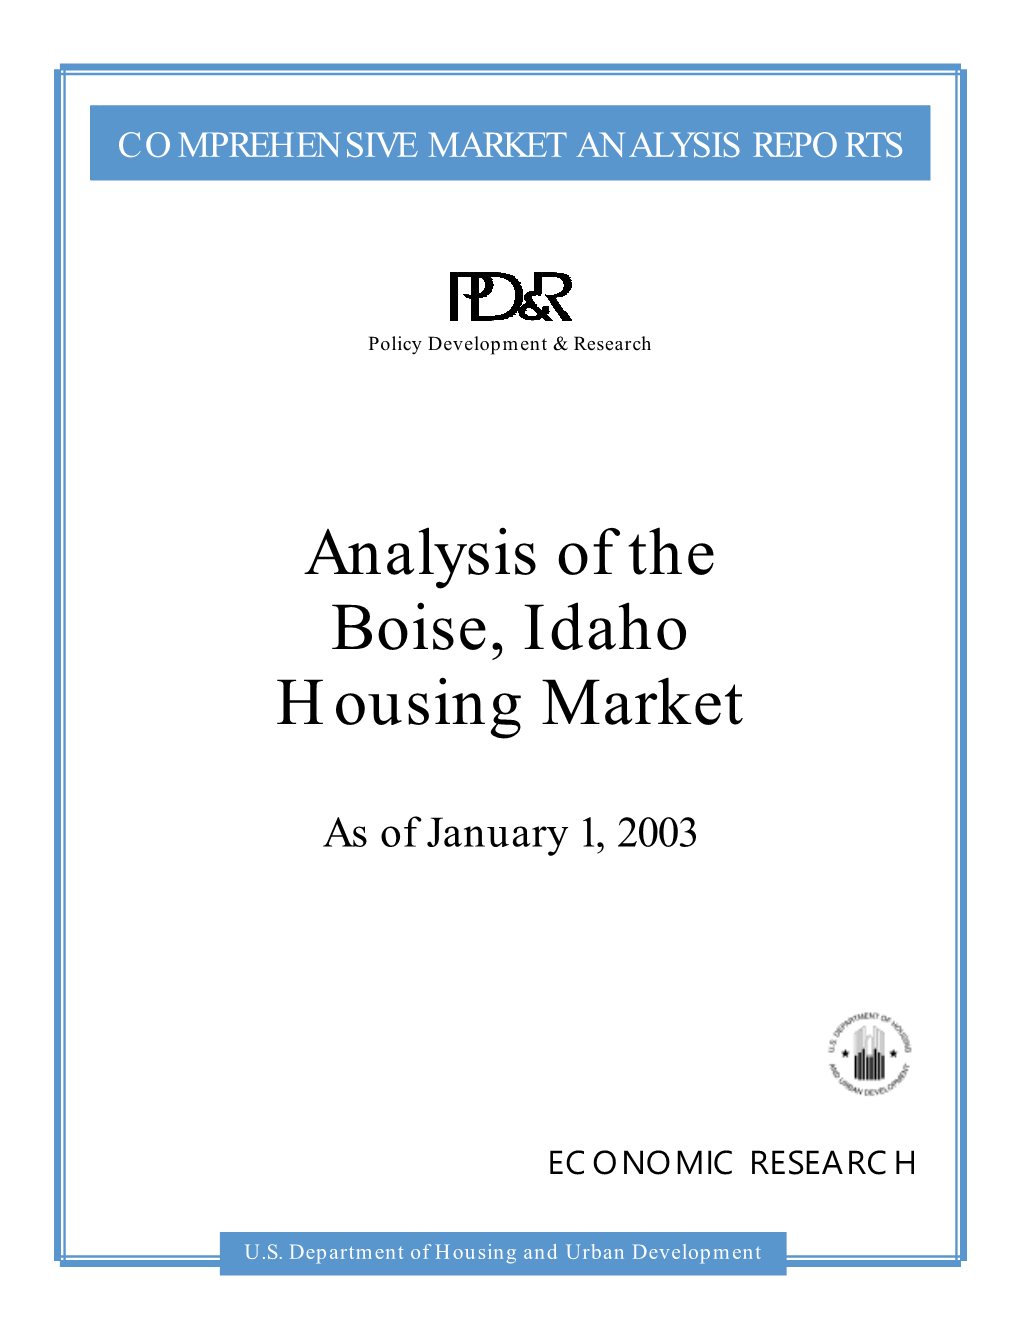 Analysis of the Boise, Idaho Housing Market